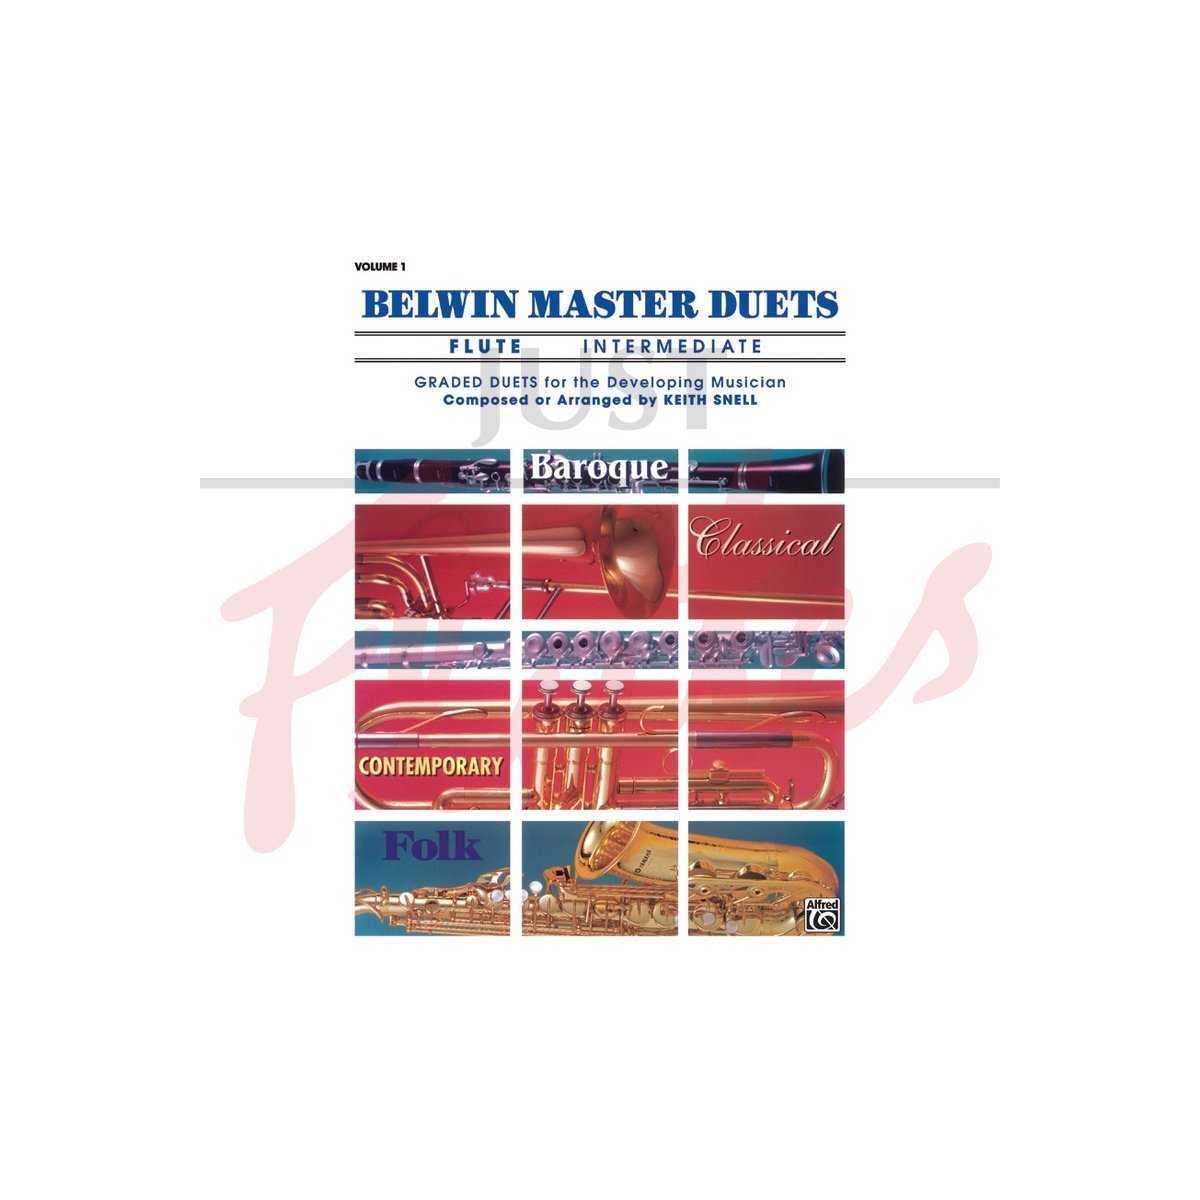 Belwin Master Duets, Vol 1, Intermediate [Flute]